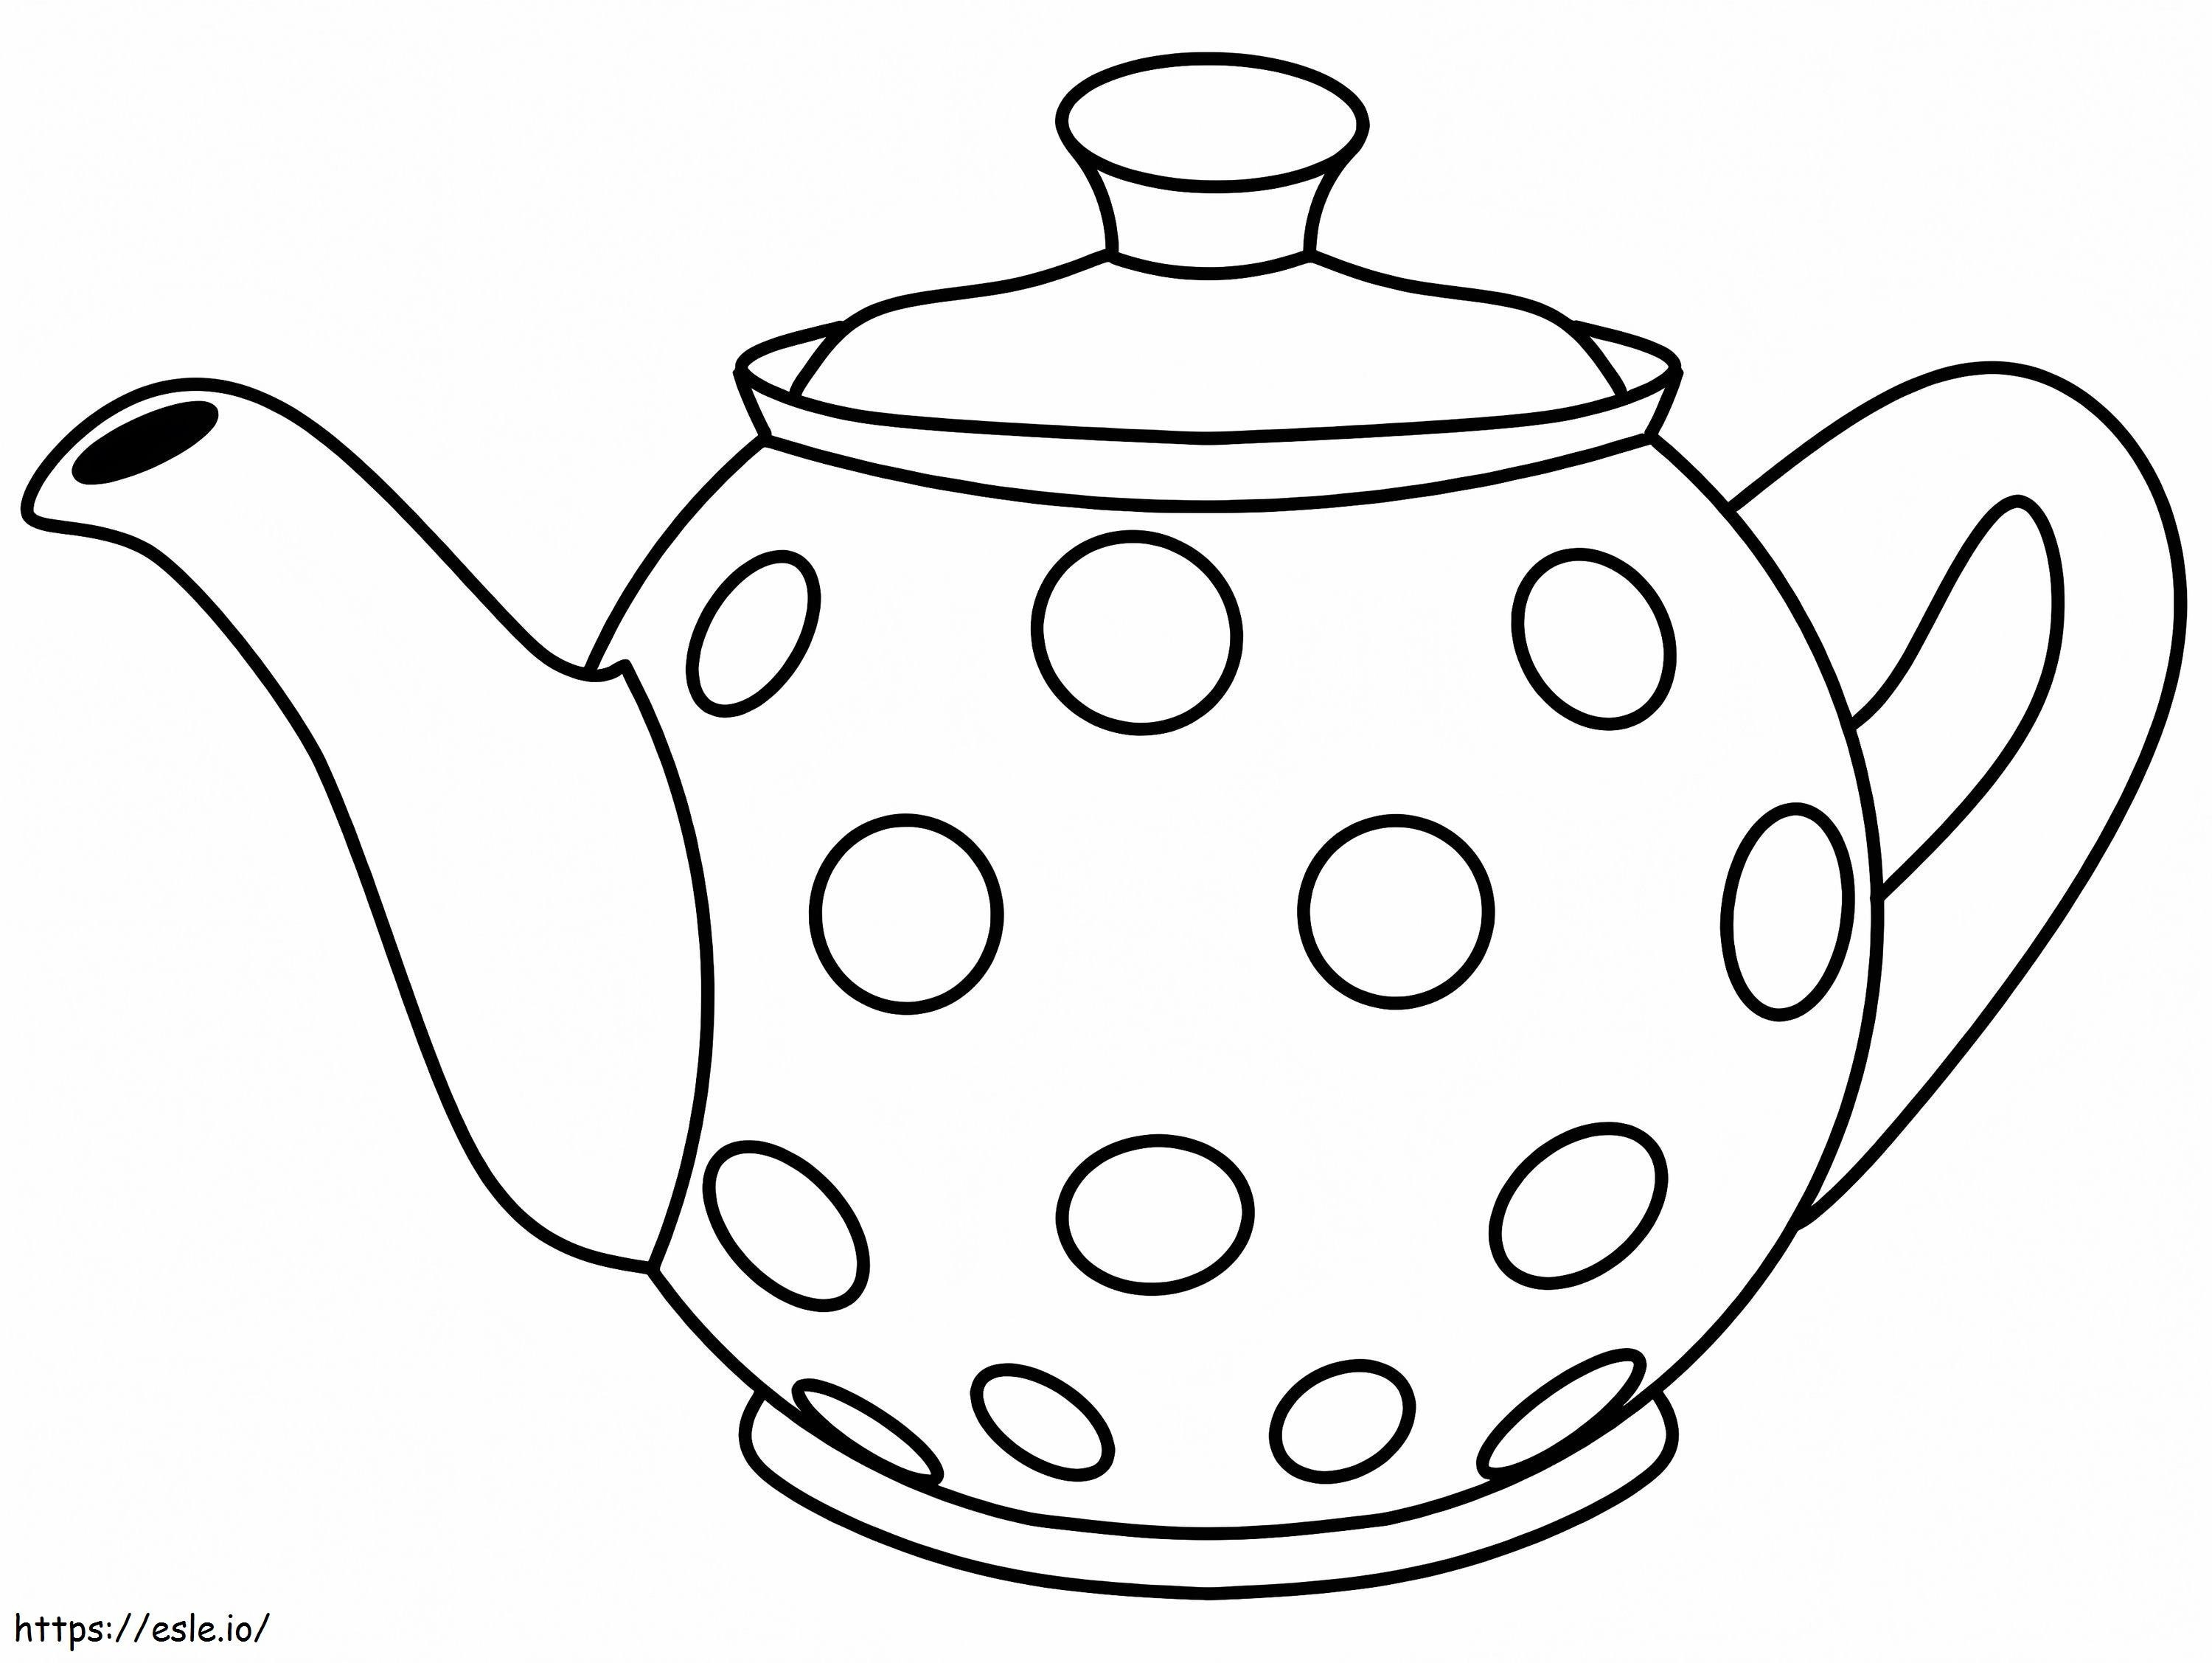 Teapot Polka Dot coloring page